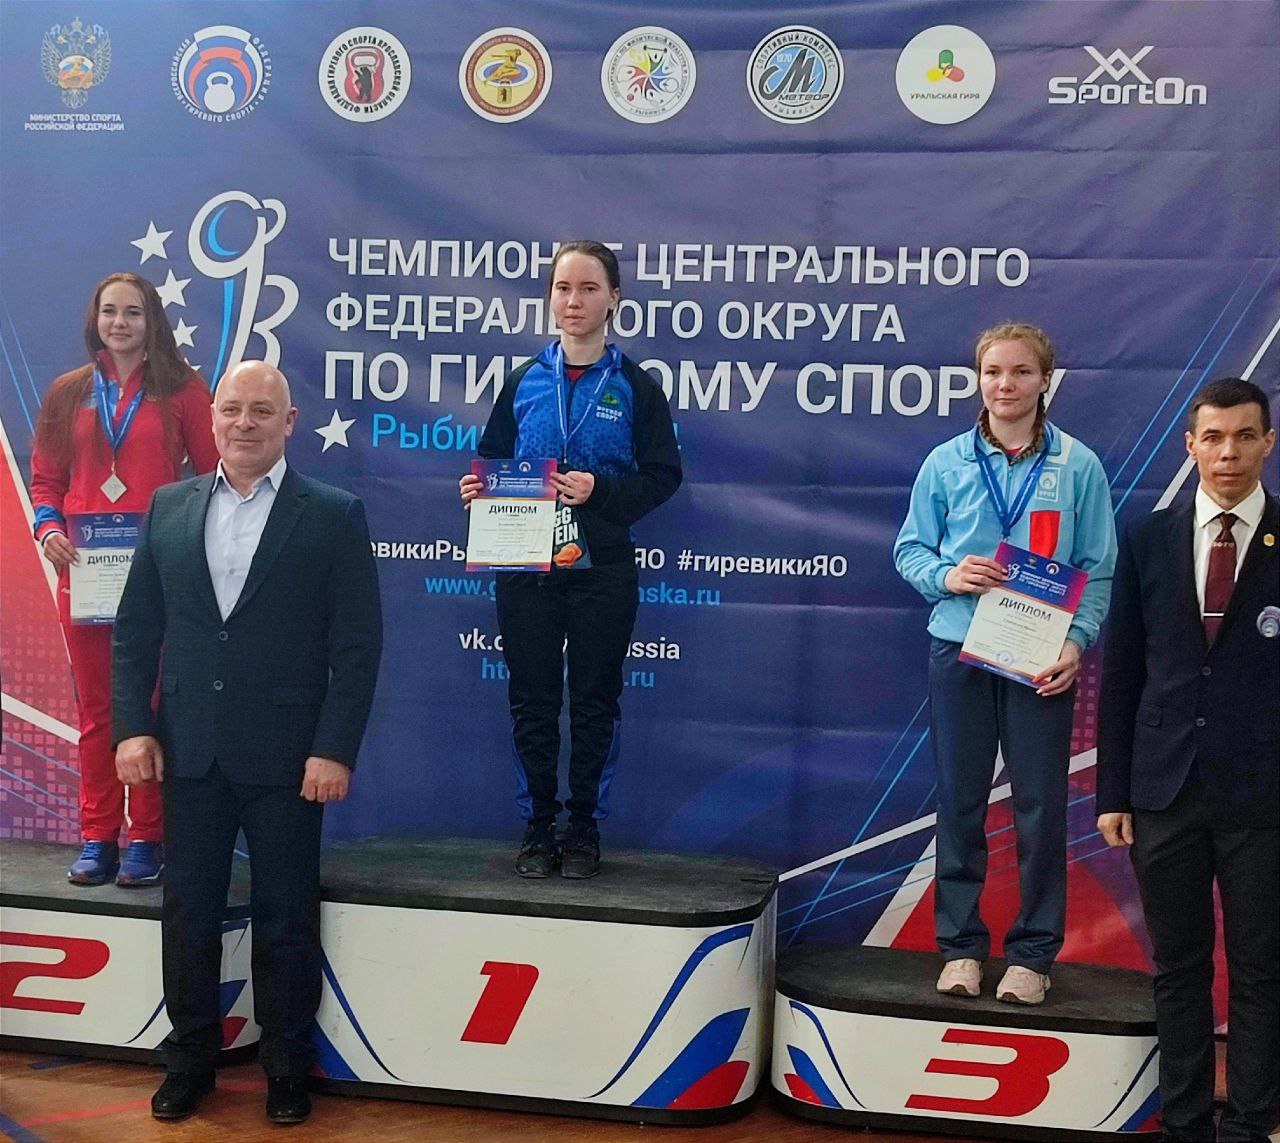 Беликова Олеся заняла 1 место на Чемпионате ЦФО по гиревому спорту.